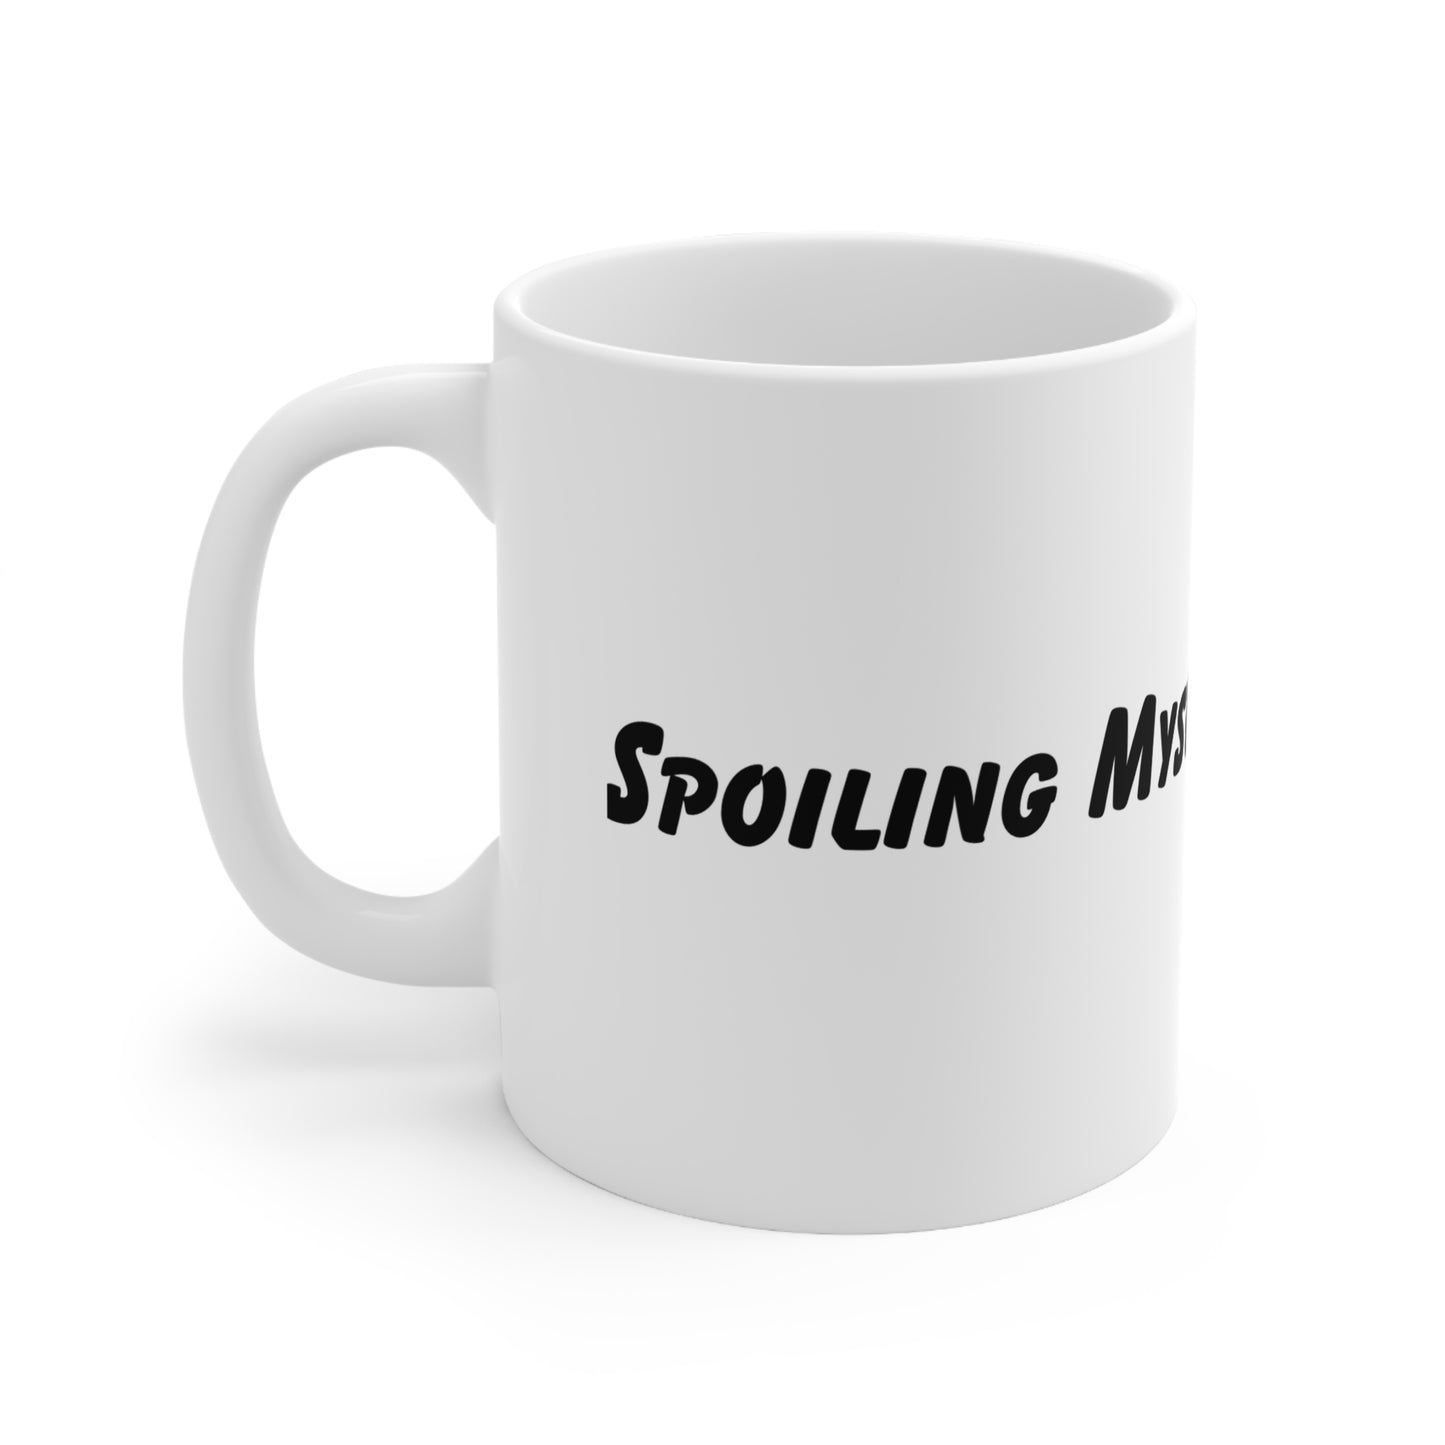 Spoiling Myself! Ceramic Mug 11oz